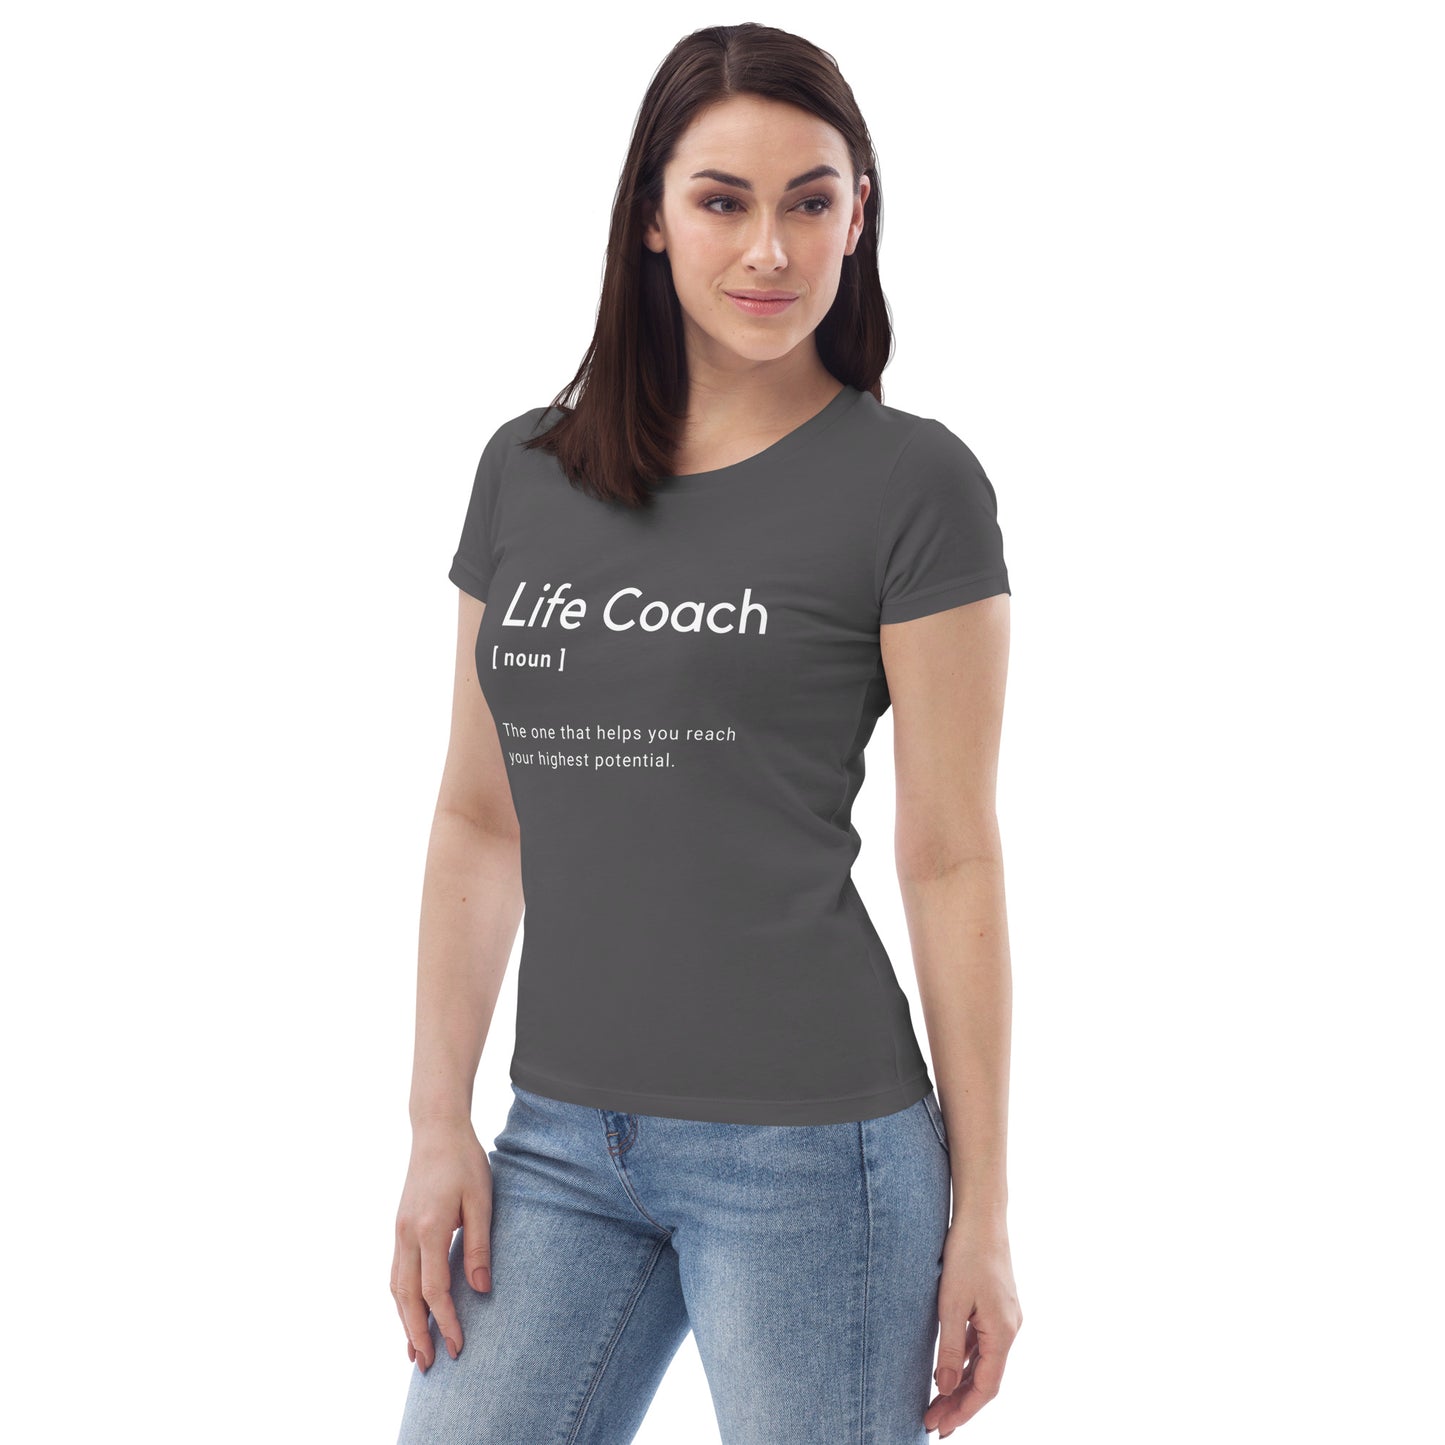 Life coach t-shirt